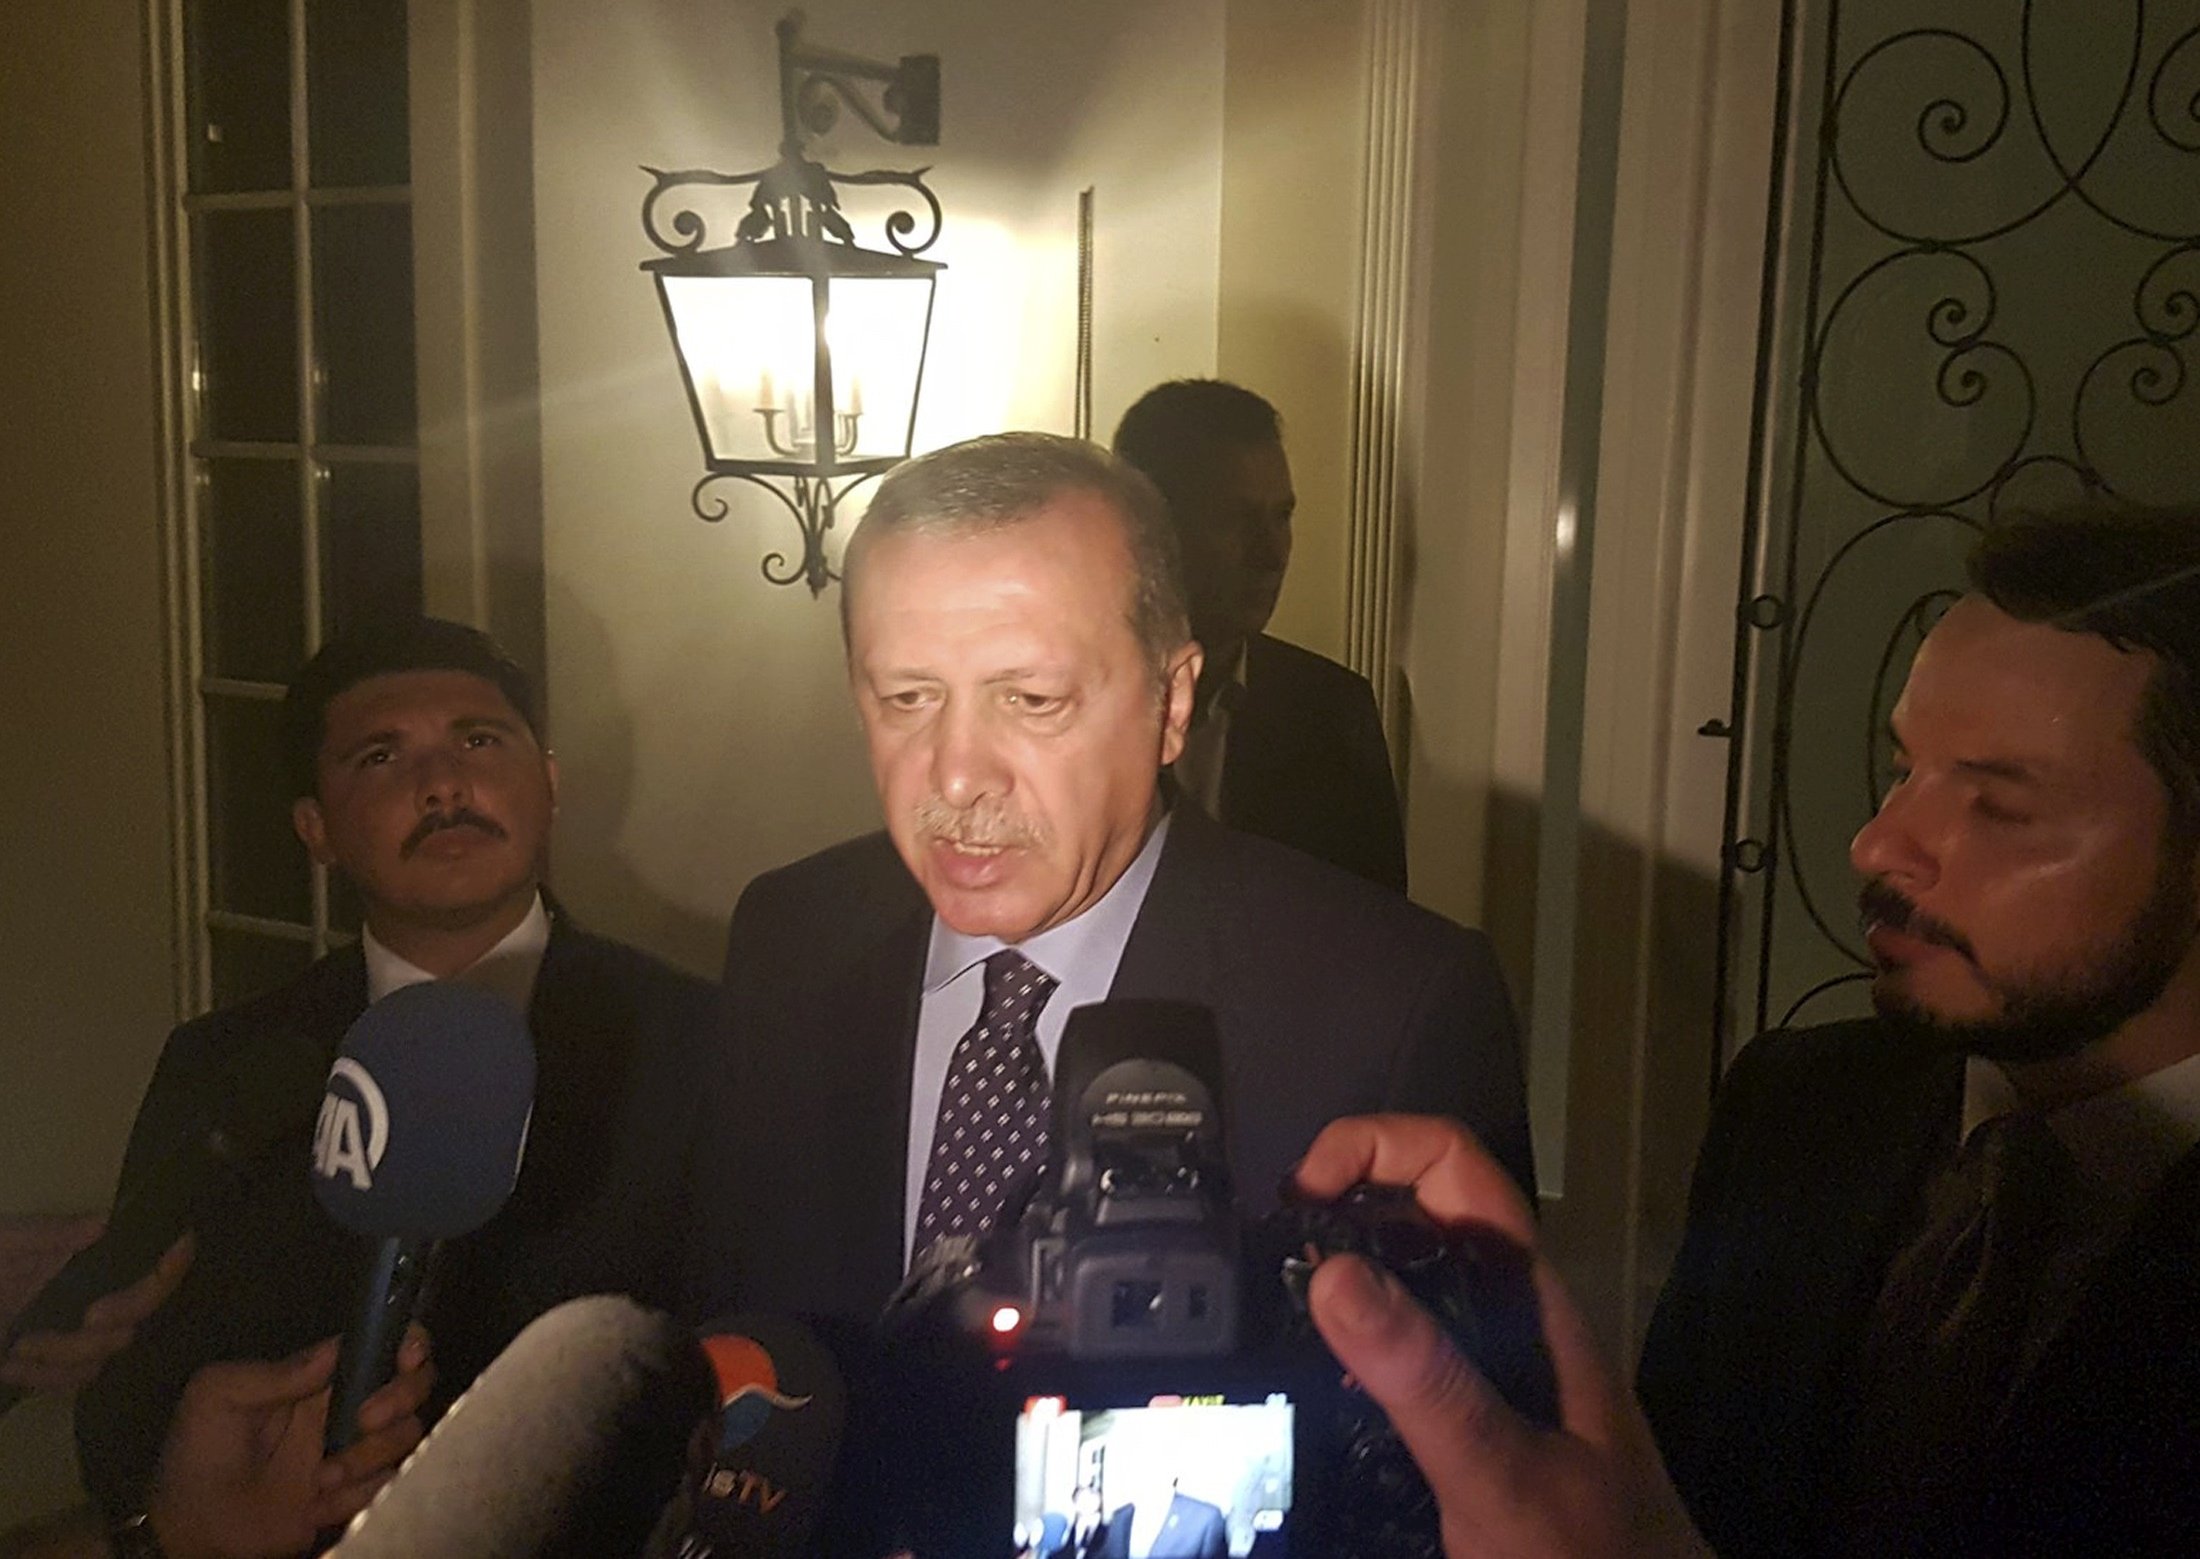 Turkish President Recep Tayyip Erdogan speaks to media in the resort town of Marmaris, Turkey, on July 15, 2016.